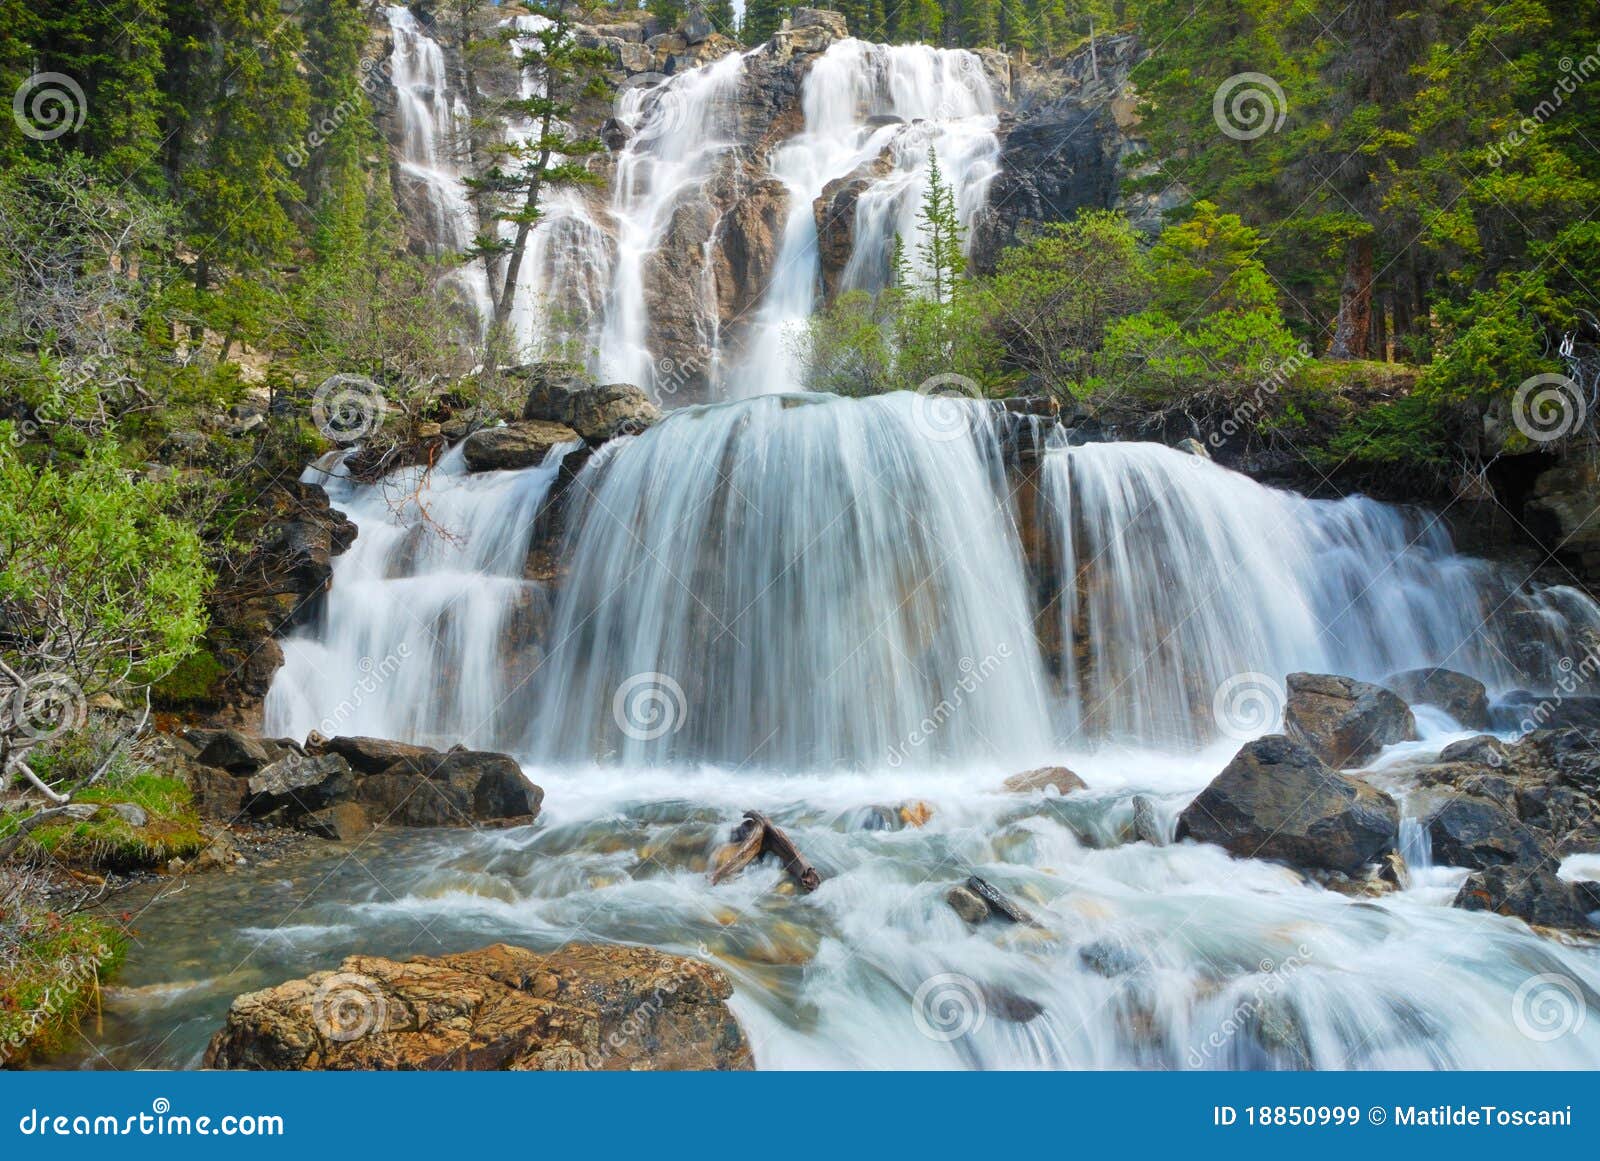 rockies waterfall